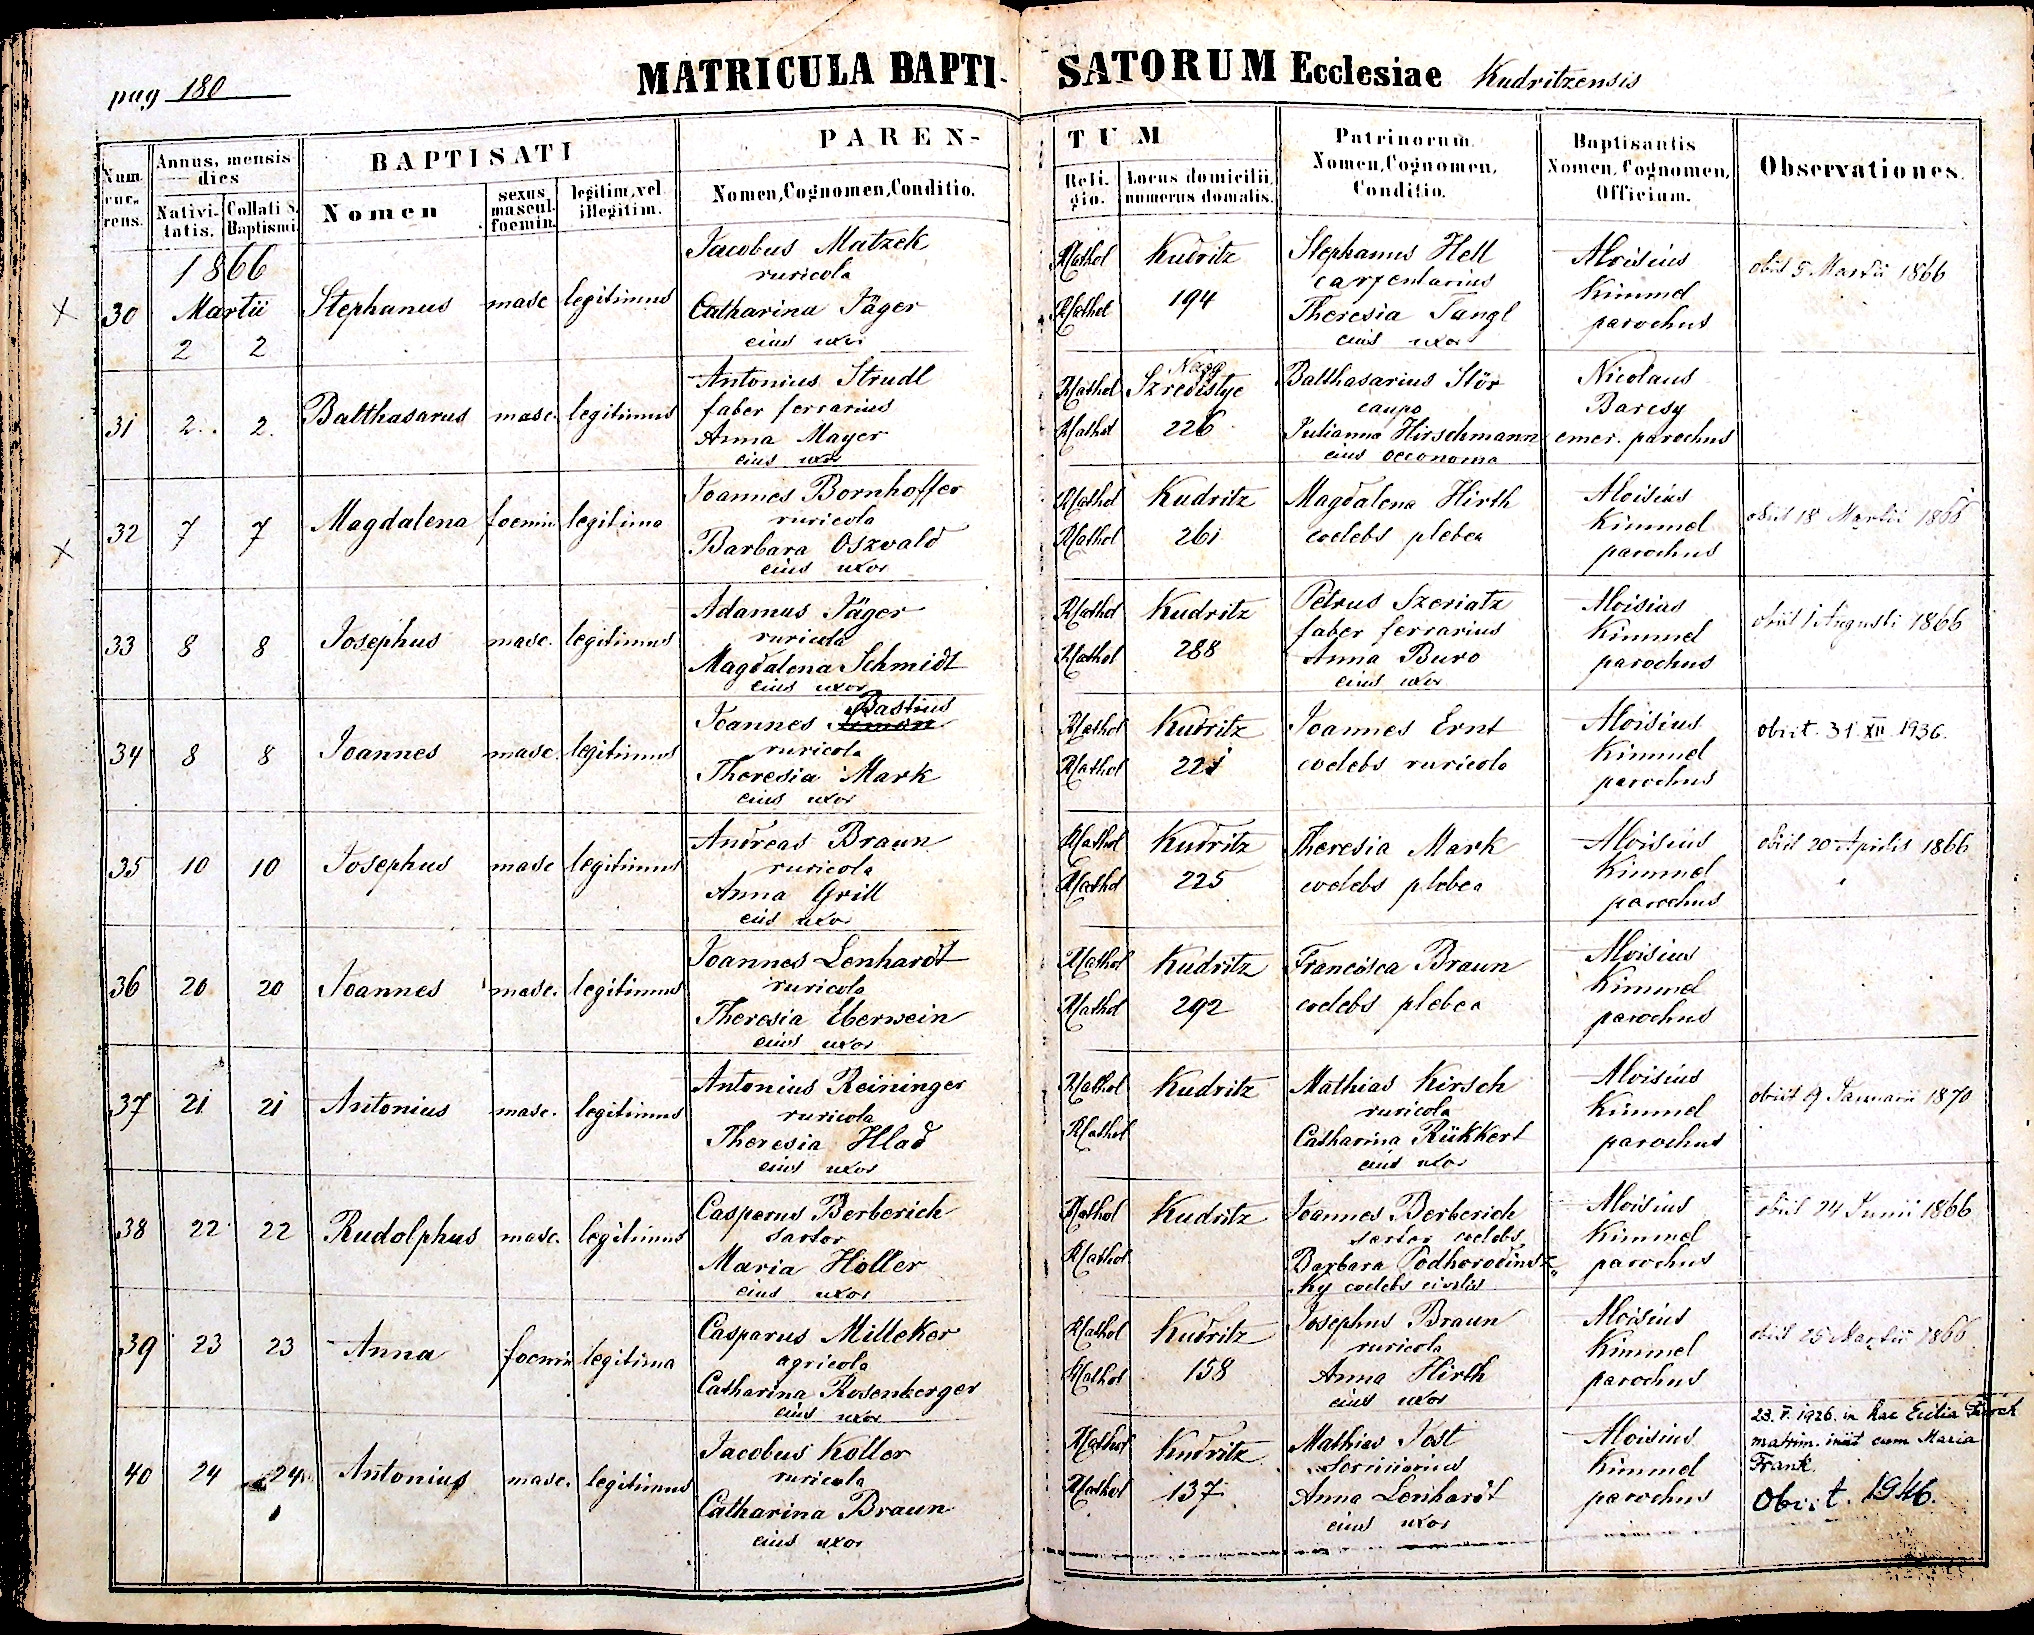 images/church_records/BIRTHS/1852-1870B/180